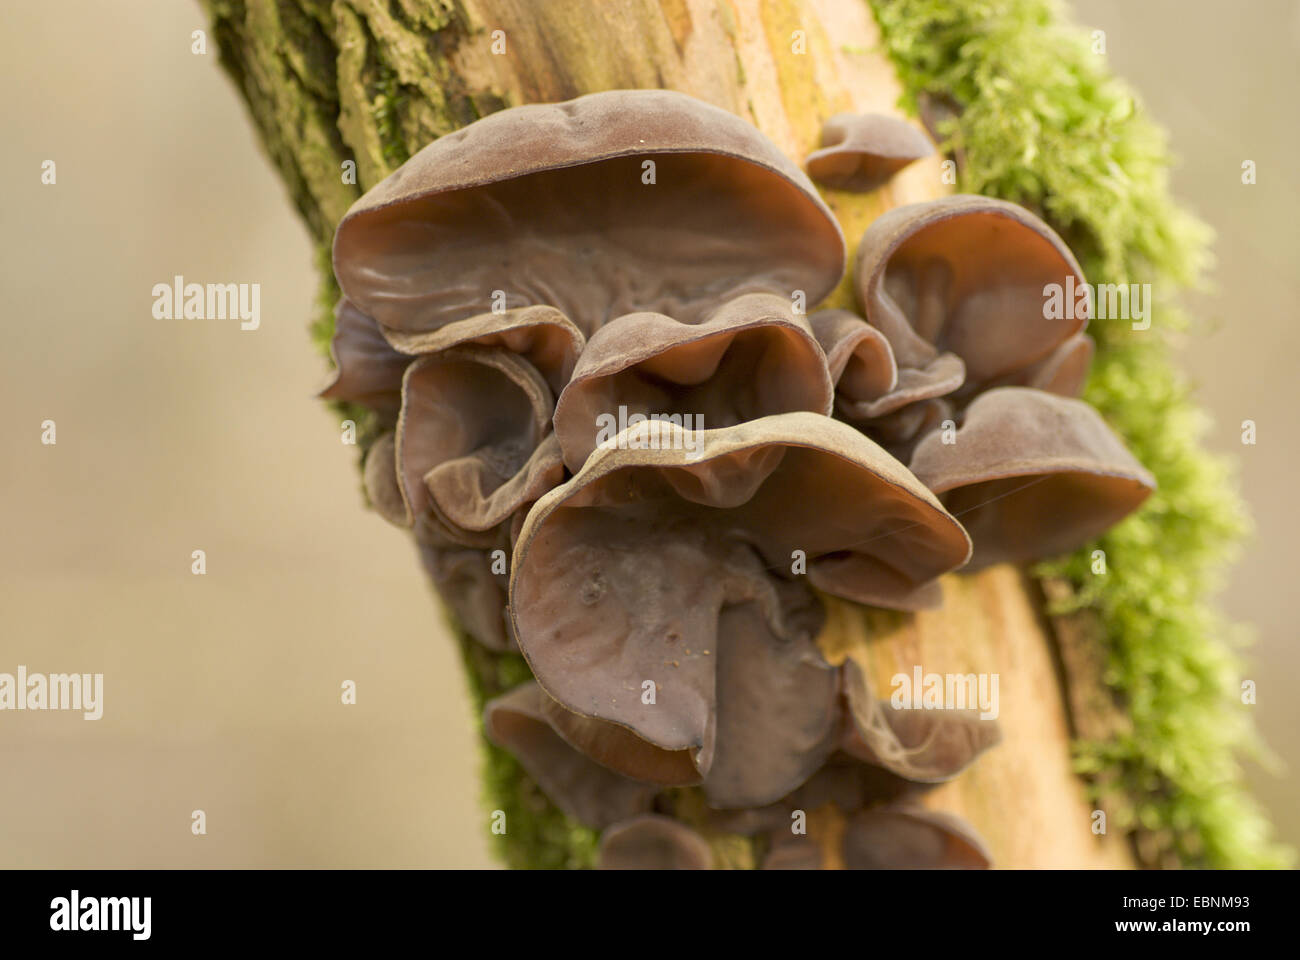 jelly ear (Auricularia auricula-judae, Hirneola auricula-judae), fruiting bodies at tree trunk, Germany Stock Photo